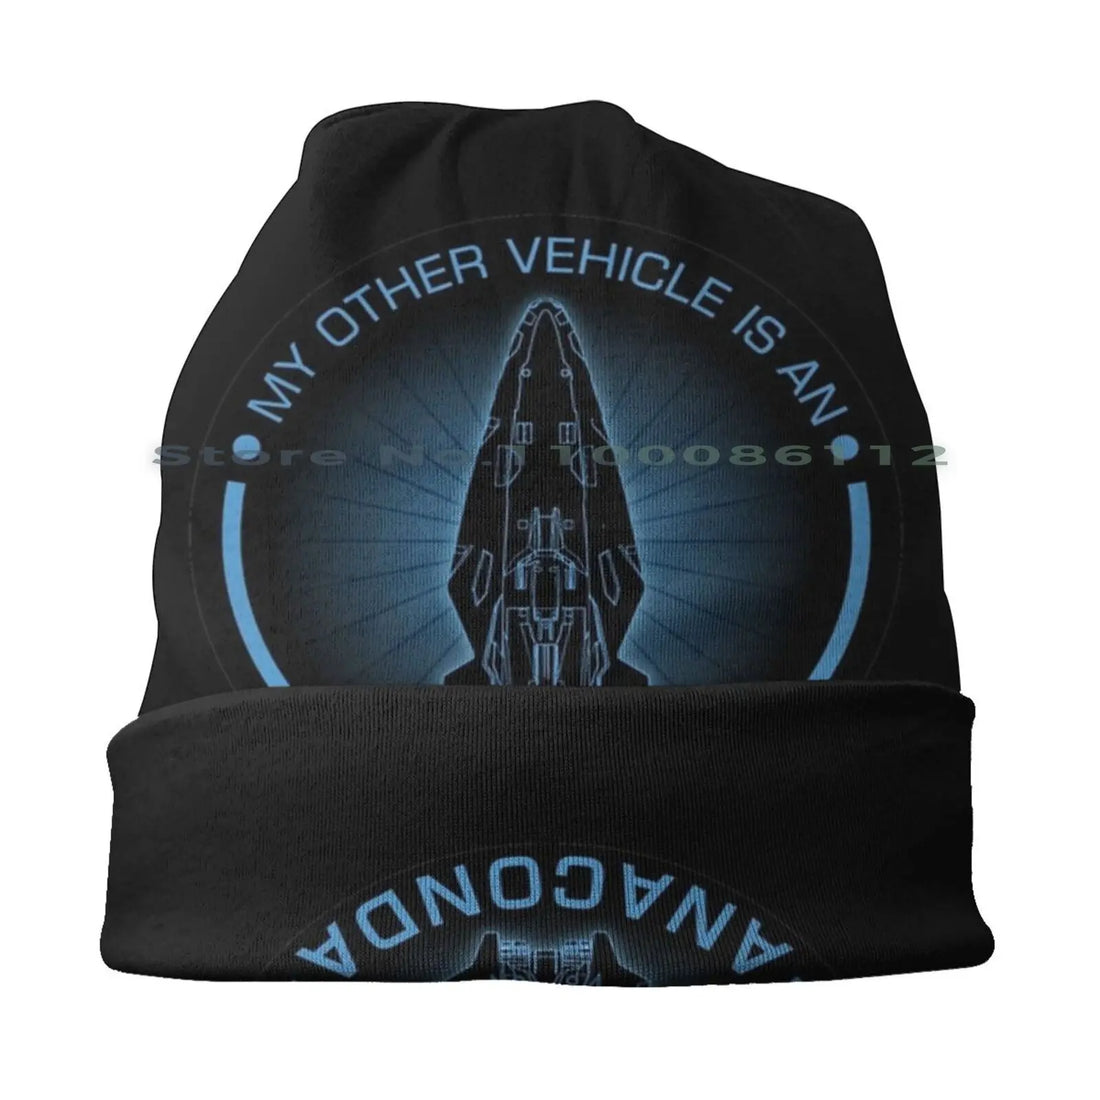 Elite Dangerous : Other Vehicle Anaconda Beanies Knit Hat Elite Dangerous Video Game Spaceship Madjack Space Travel Gamer Scifi